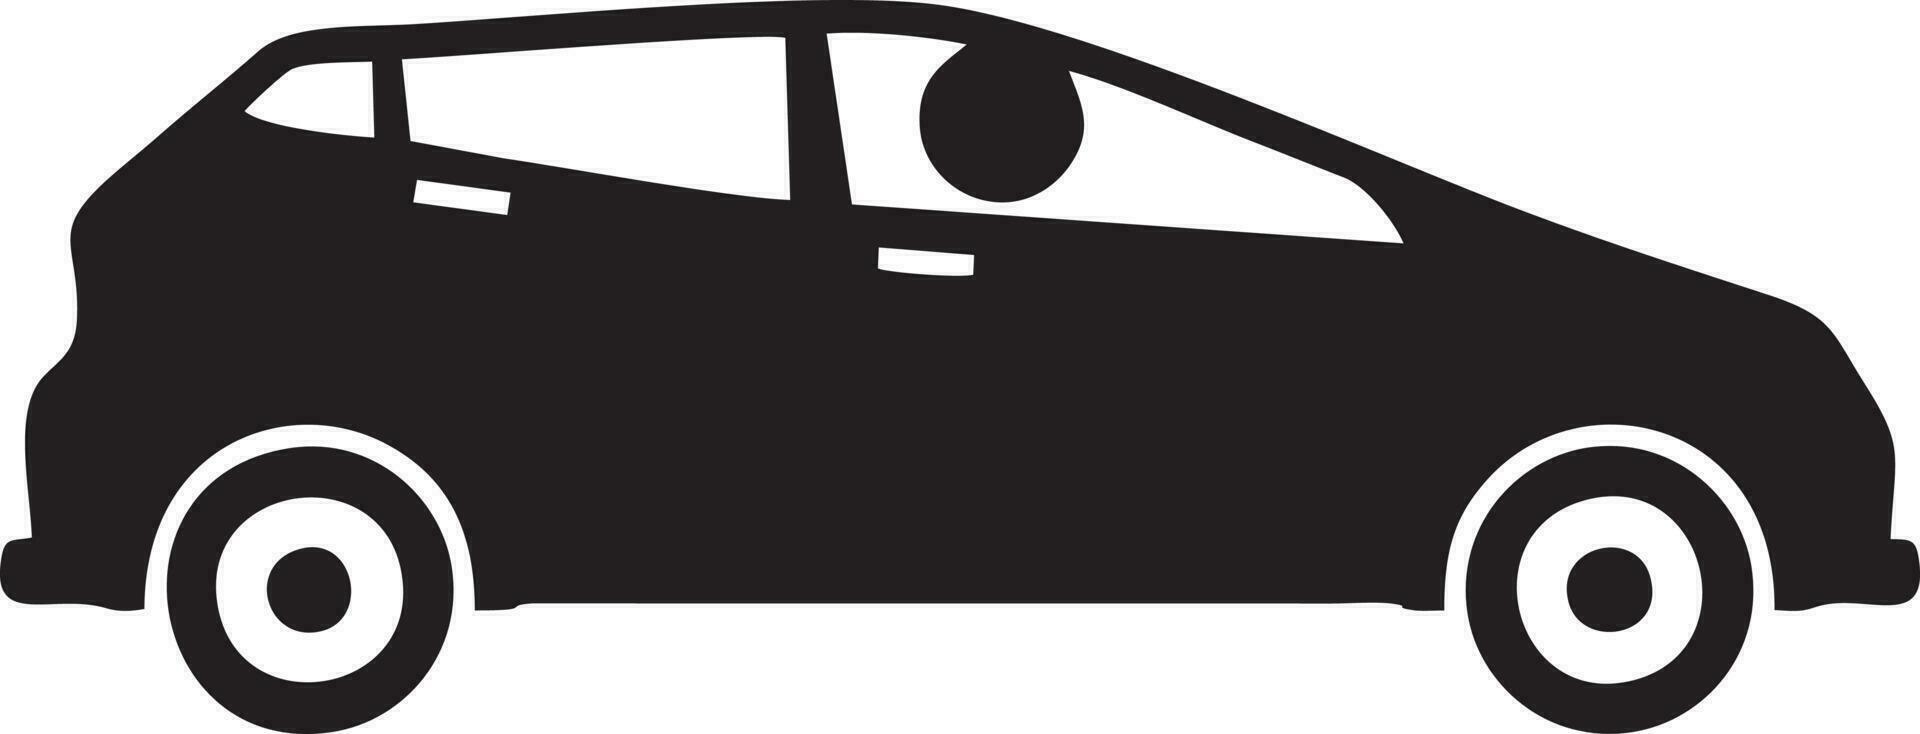 car vehicle transportation icon symbol vector image. Illustration of the automobile automotive motor vector design. EPS 10